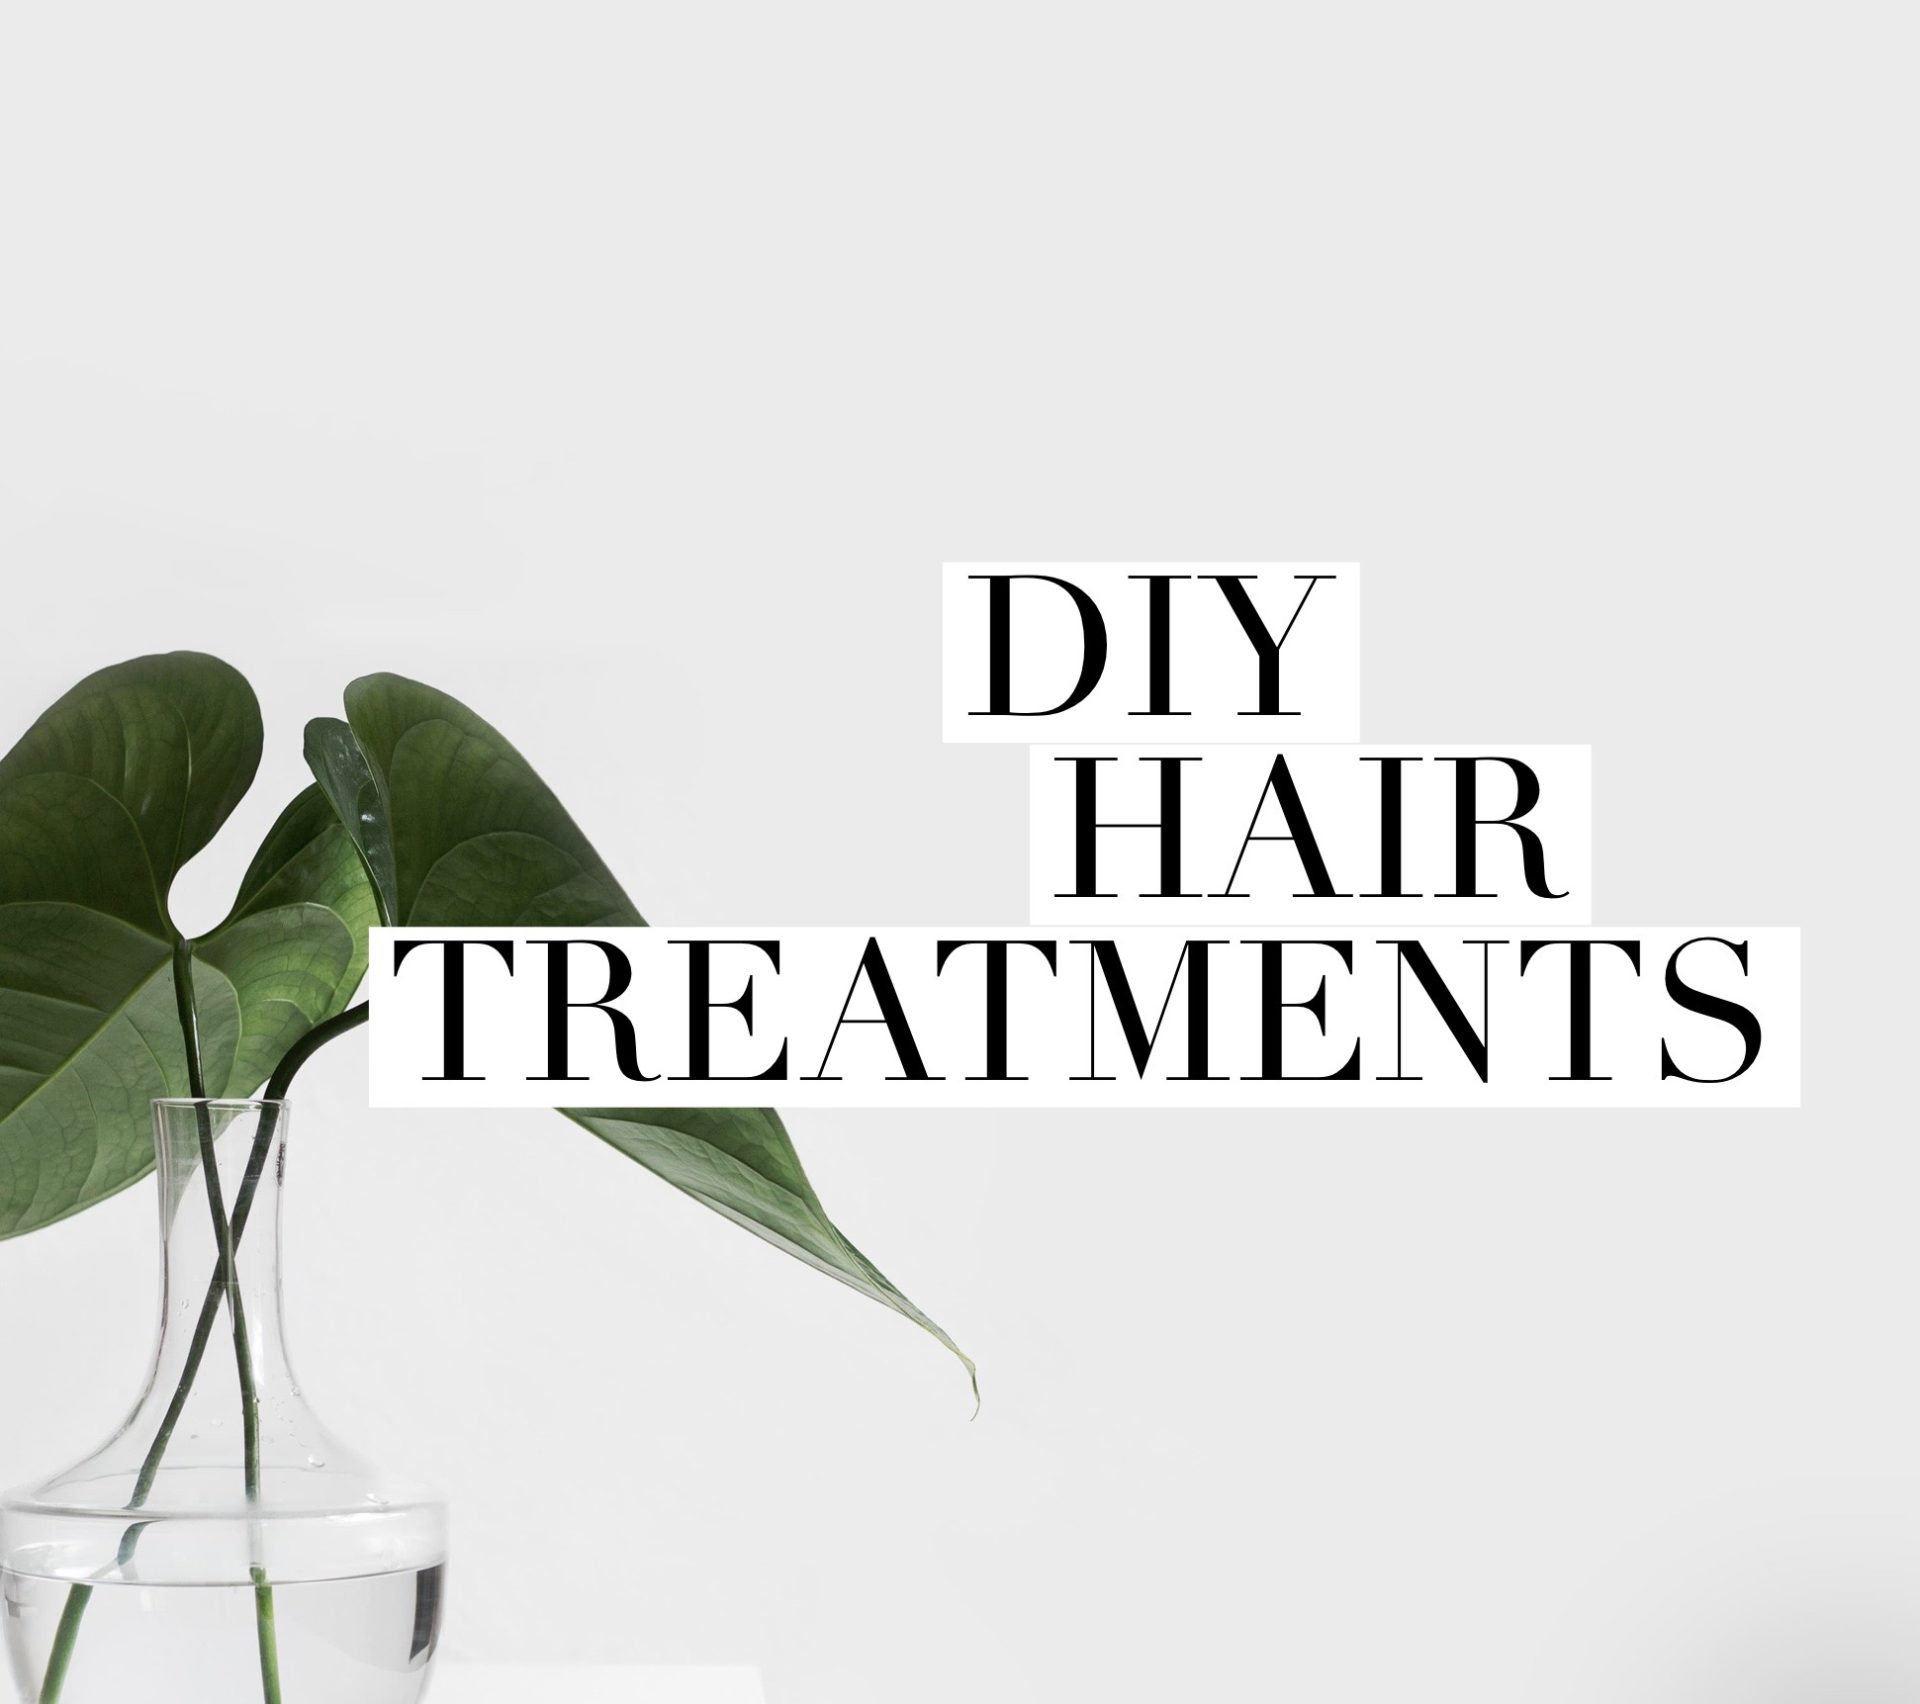 Top Tips For DIY Hair Treatments